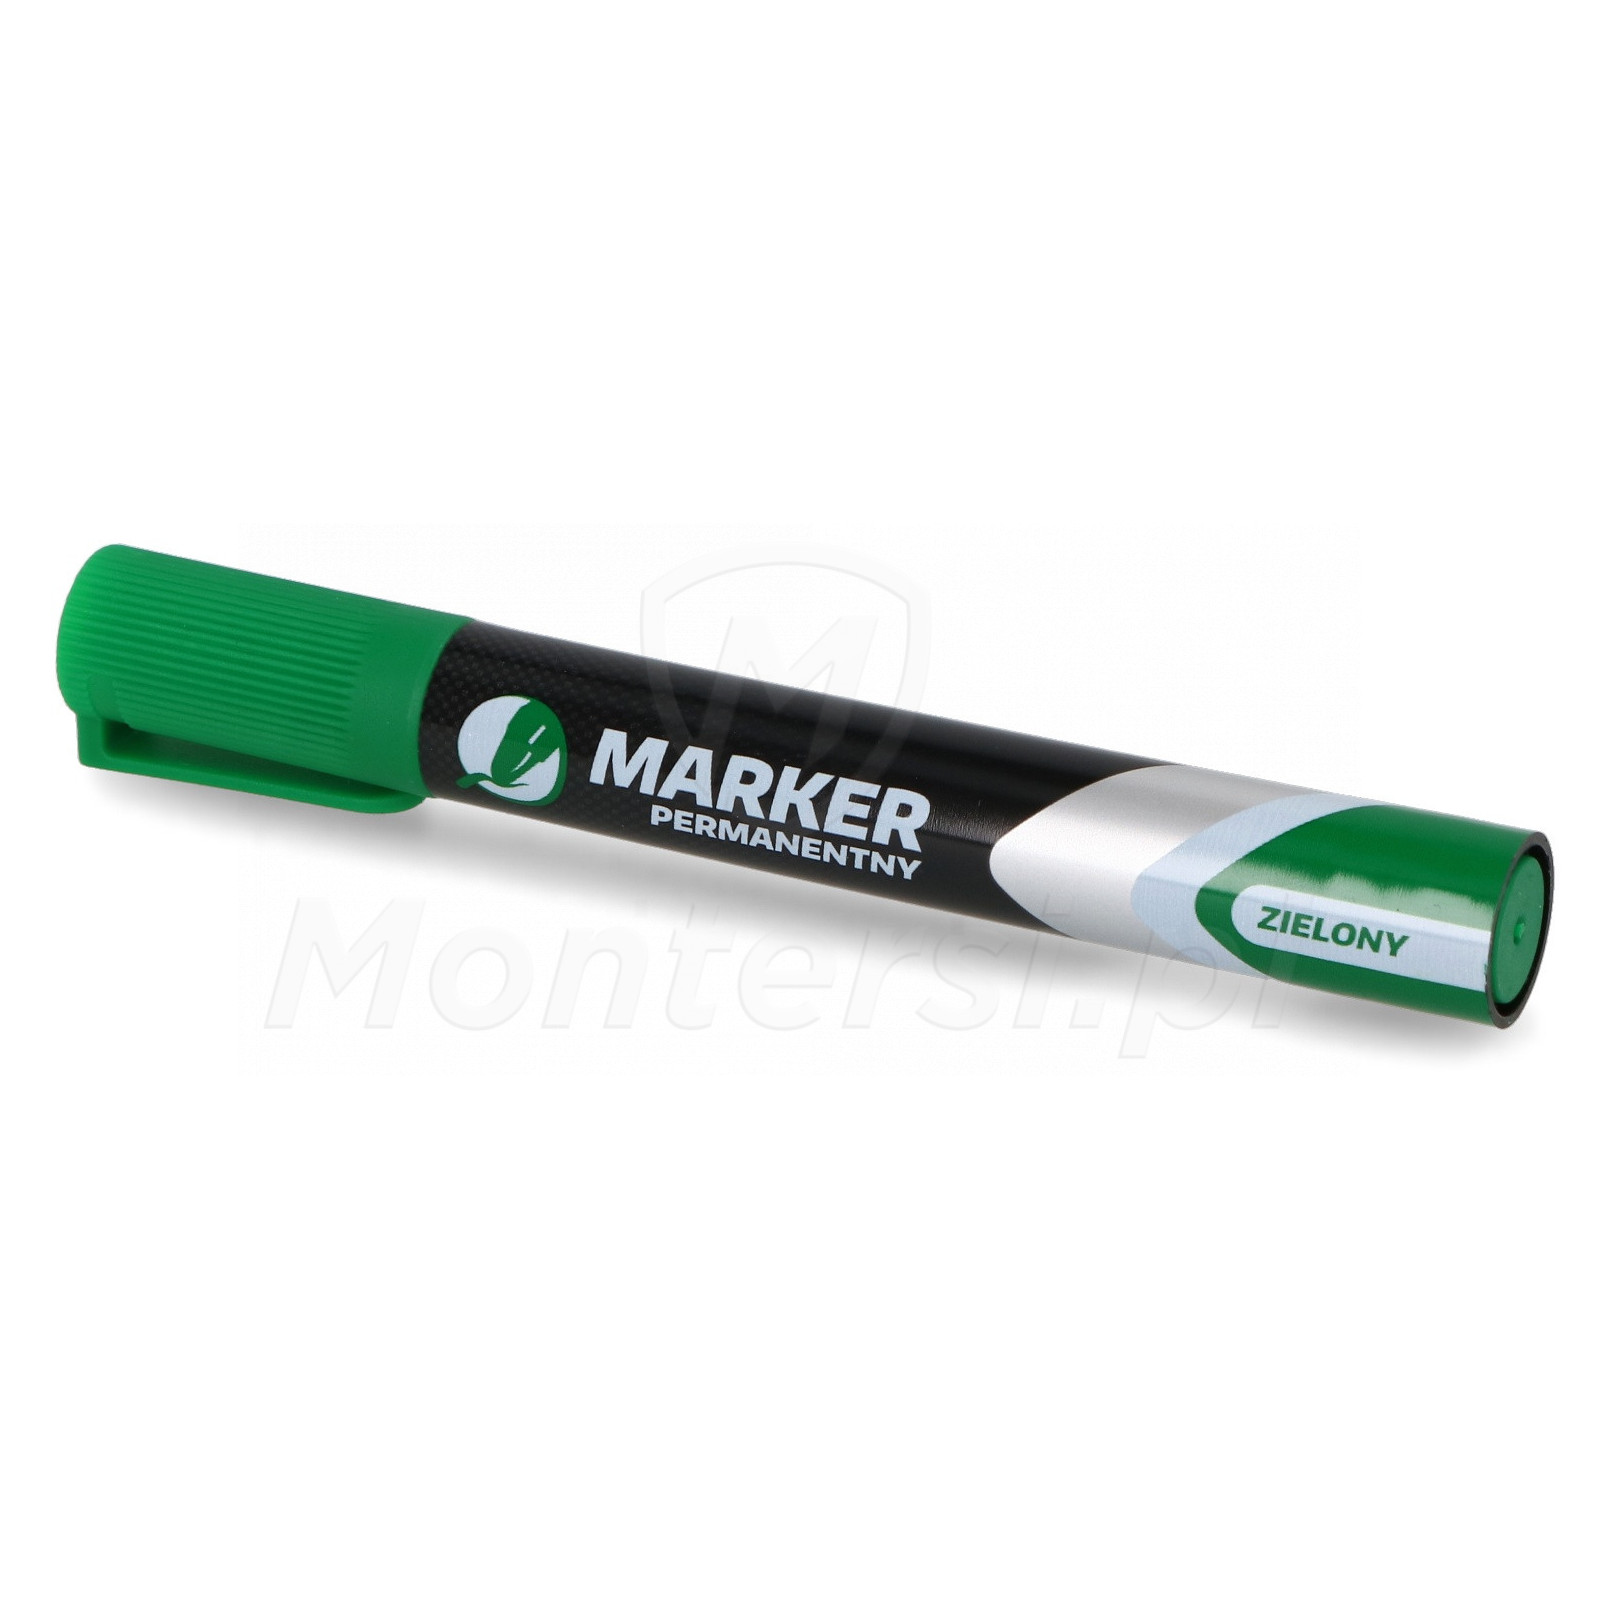 Zielony marker pernamentny